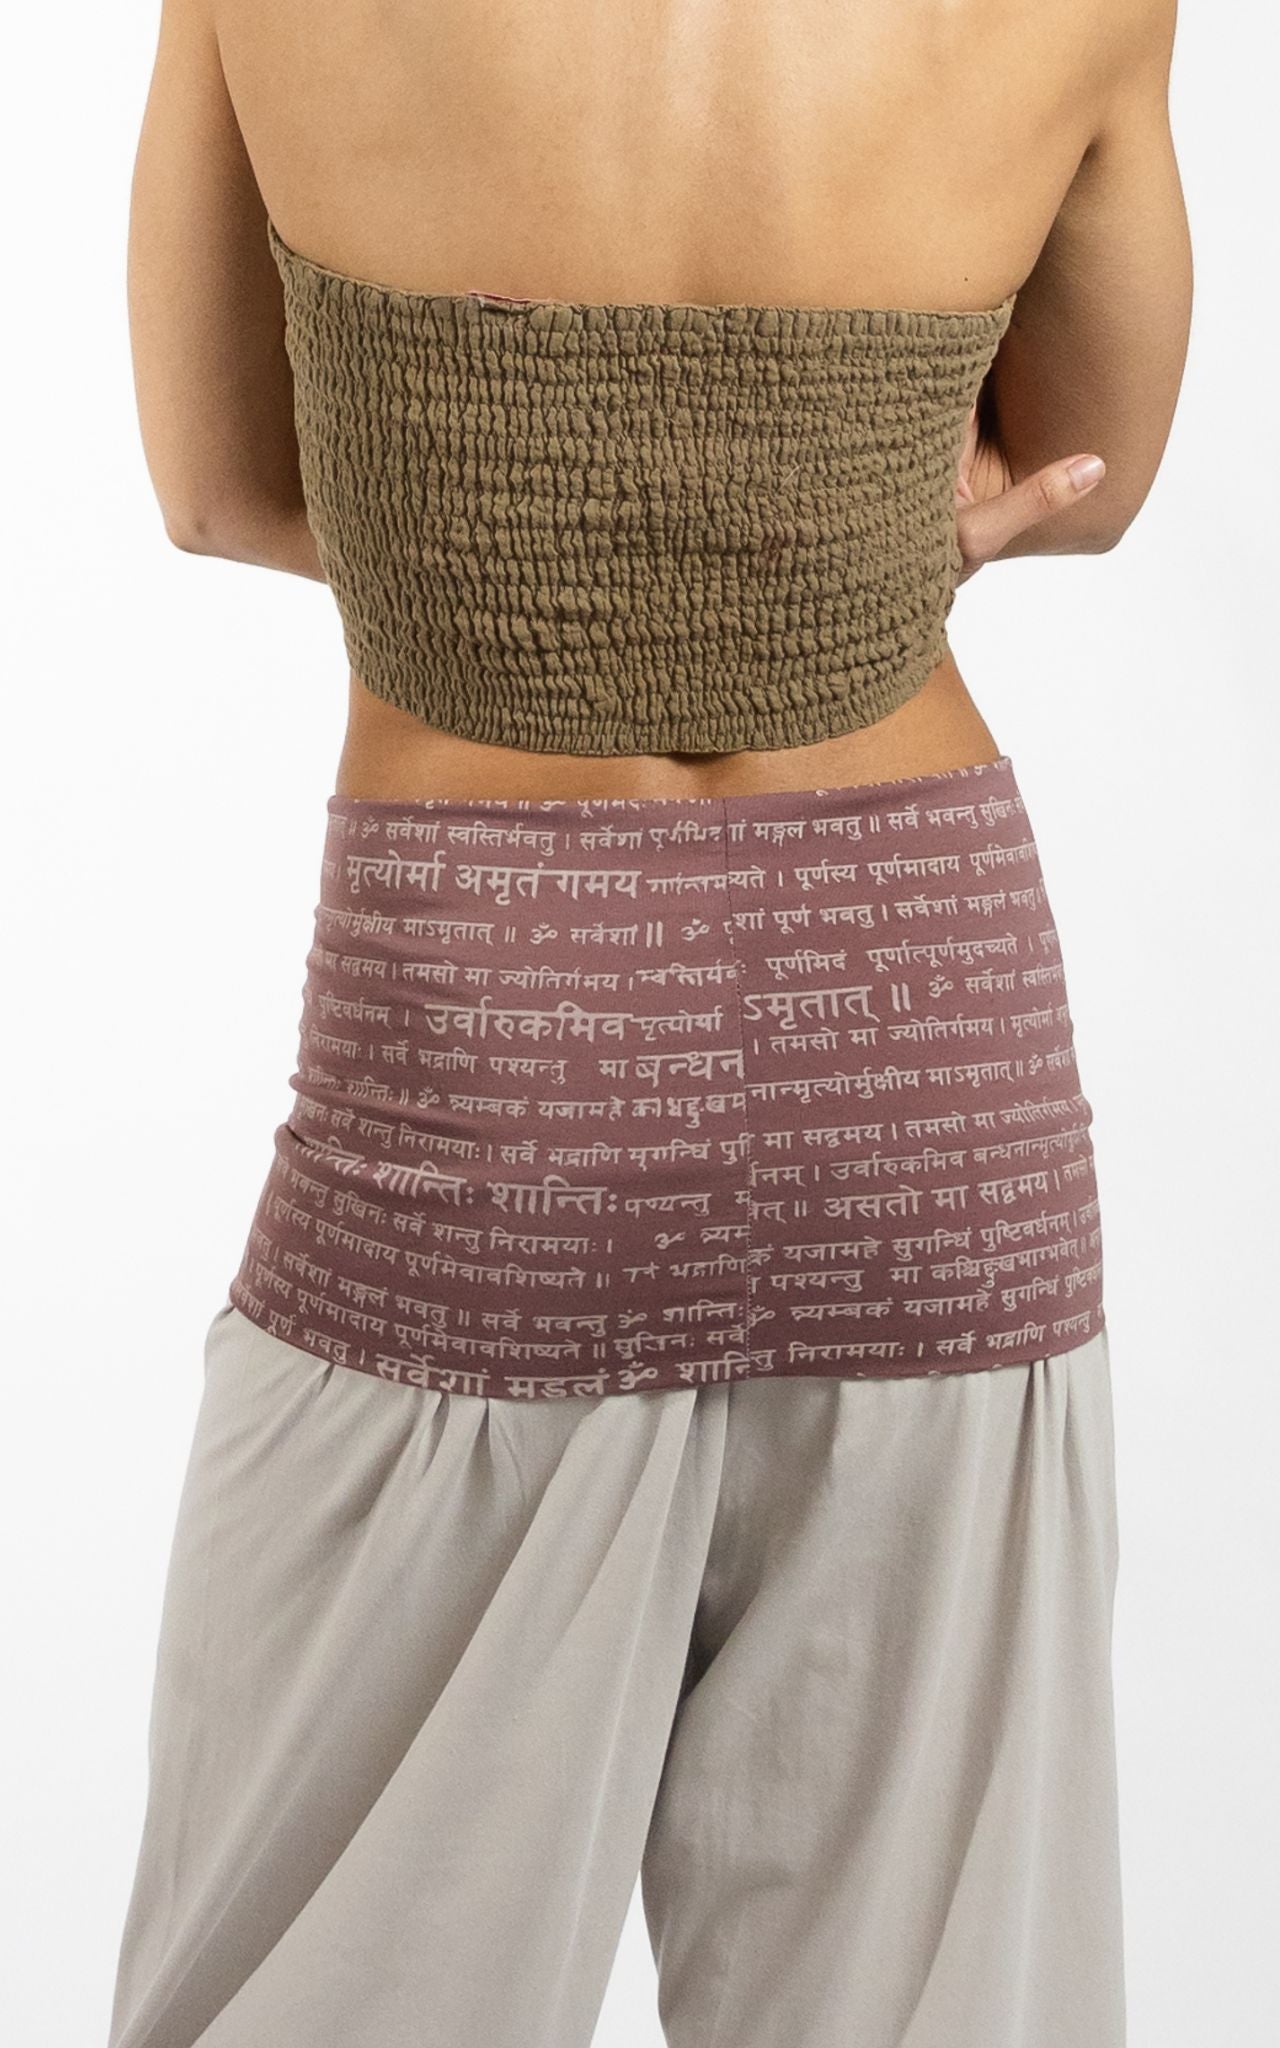 Surya Australia Organic Cotton 'Mantra' Pants made in Nepal - Oatmeal